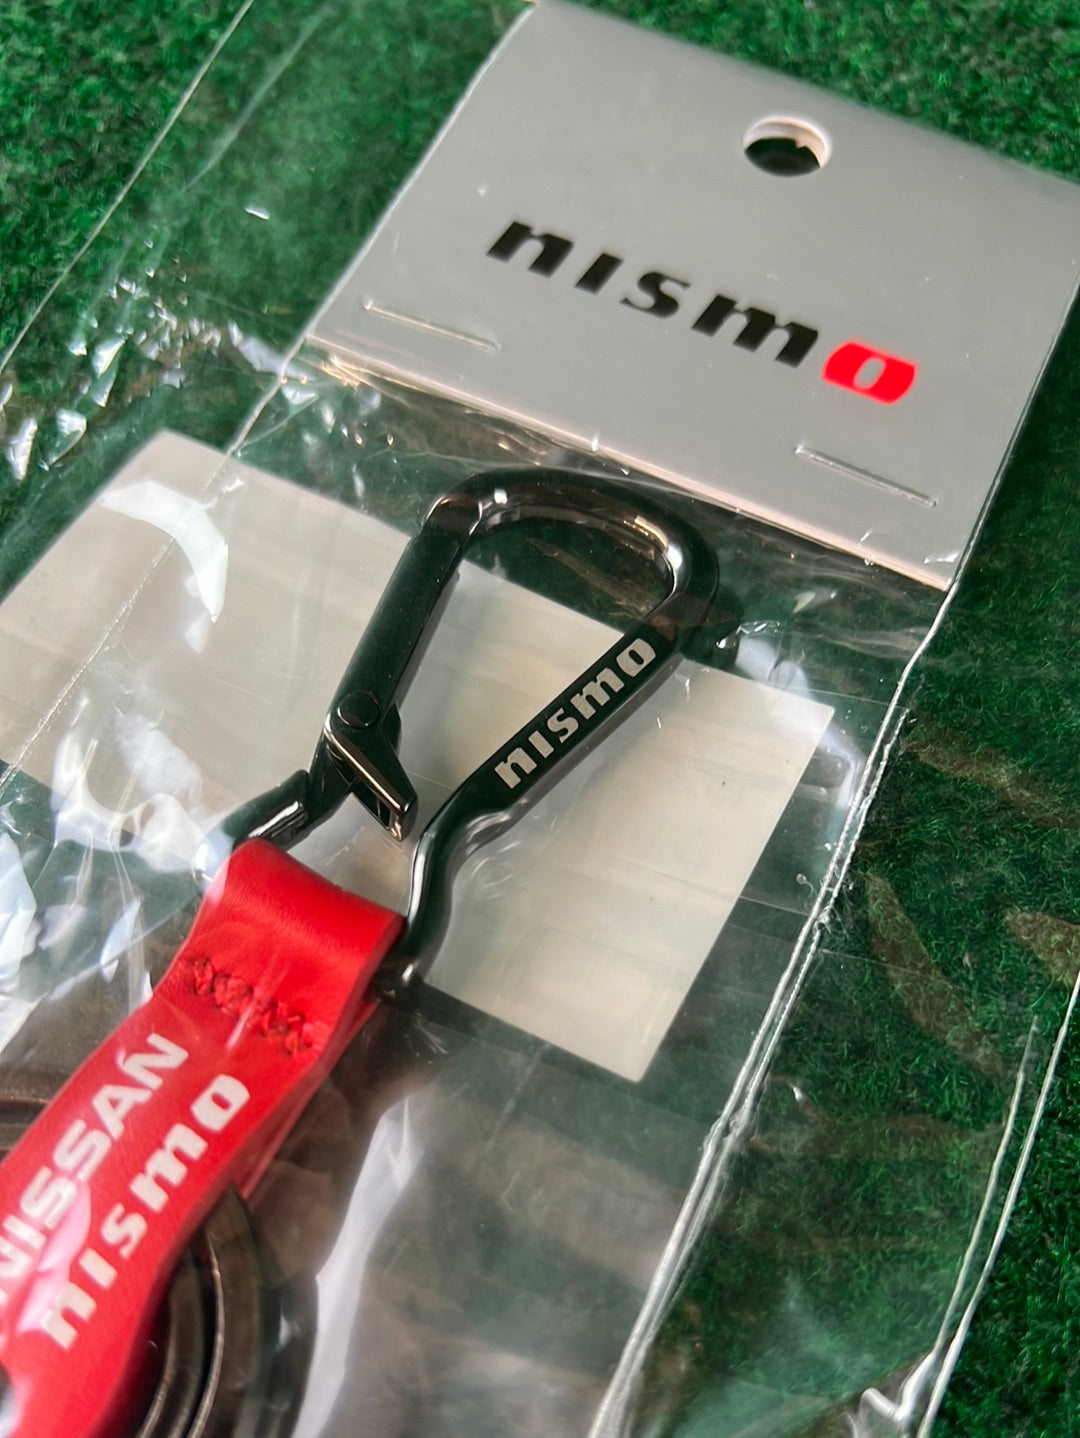 Nissan NISMO Carabiner Strap Keychain Set